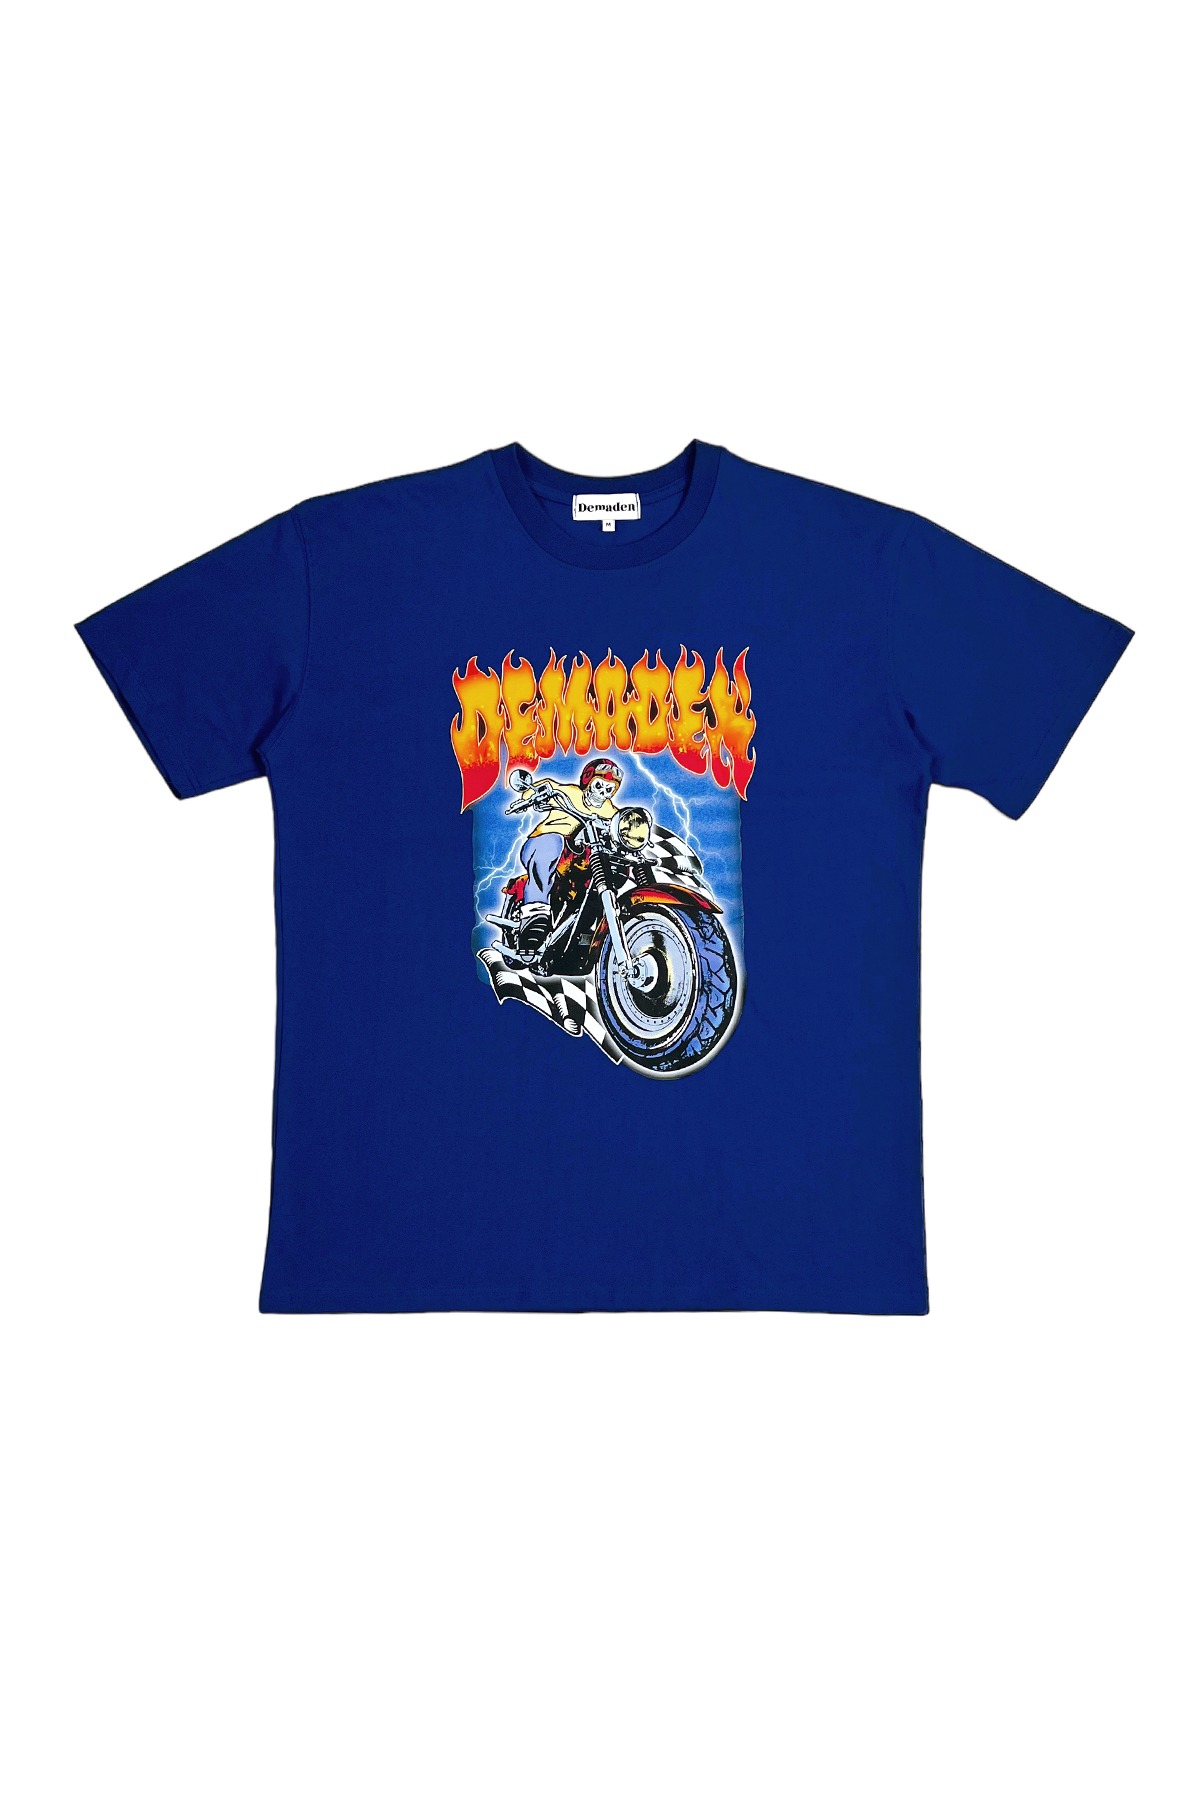 SKULL MOTORCYCLE GANG 1/2 T-SHIRT BLUE, 청바지, 데님, 가디건, 의류, 연예인, 협찬, 티셔츠, 셔츠, 반팔, 긴팔, 베스트, 조끼, 코트